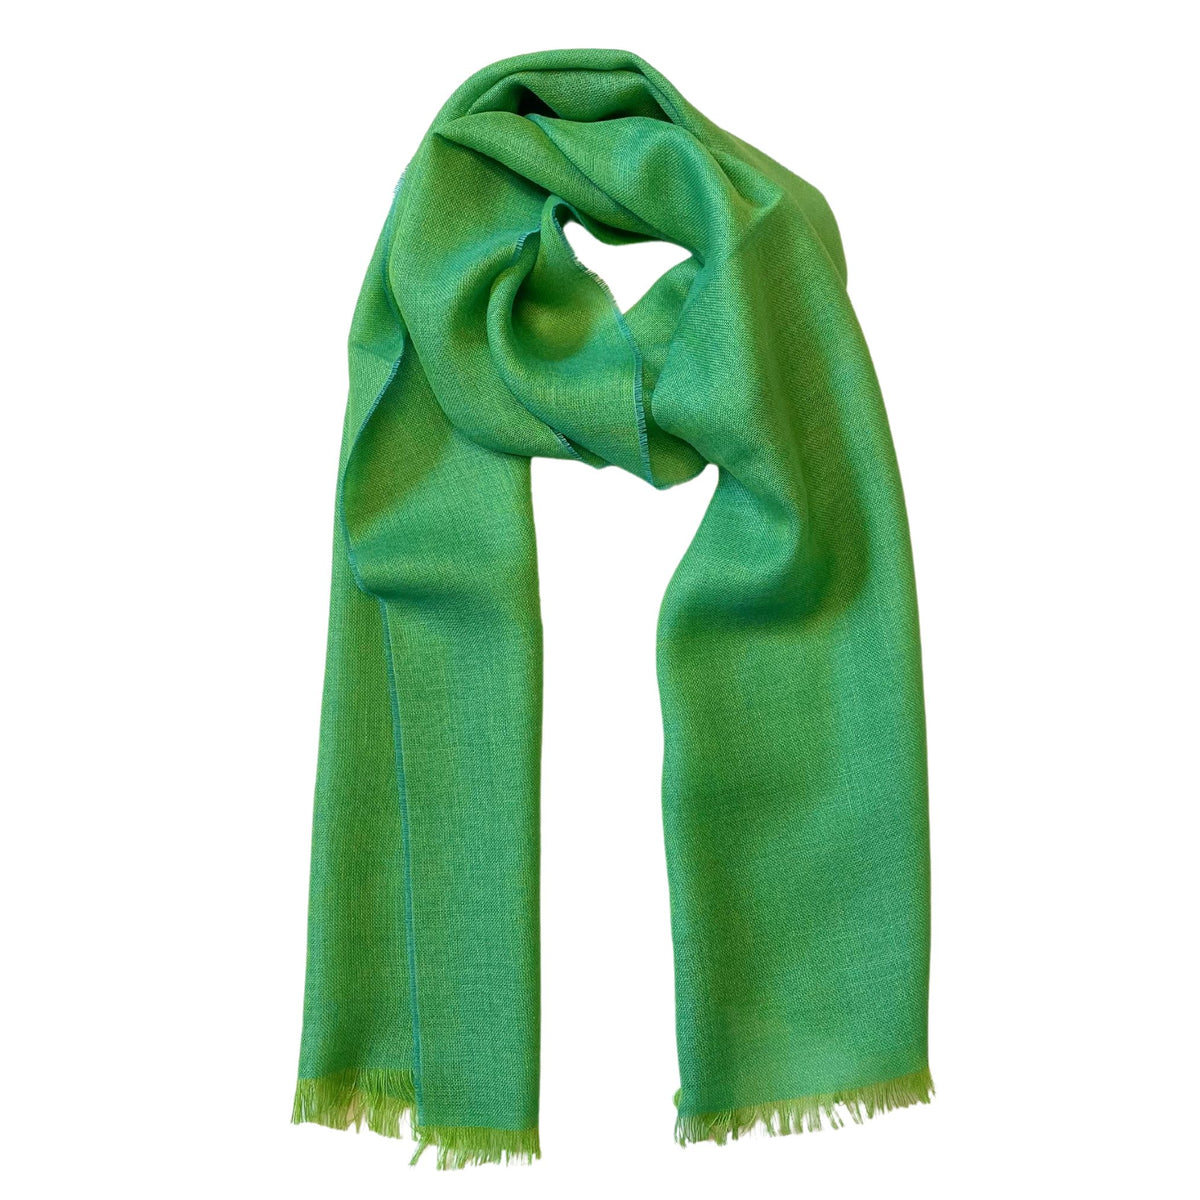 Lime emerald green alpaca wool scarf lightweight and modern